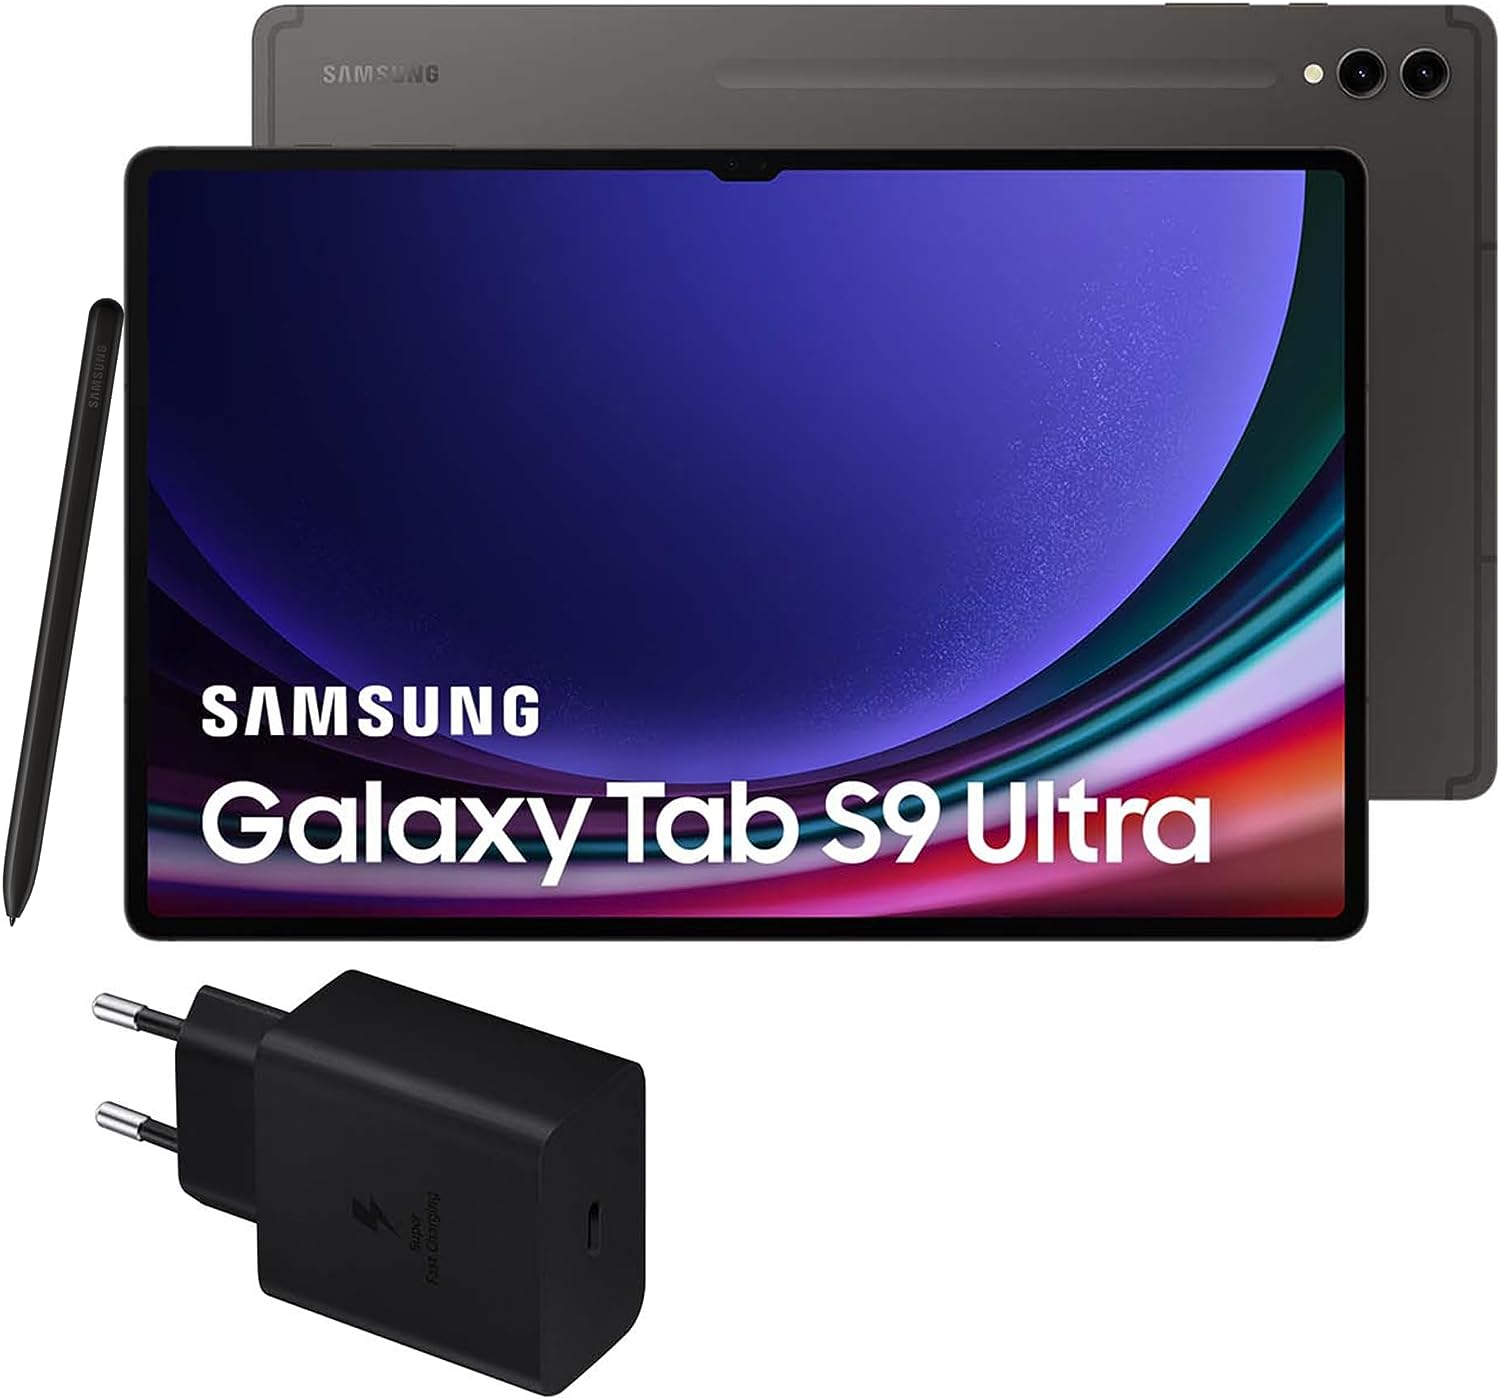 Samsung Galaxy Tab S9 Ultra versus Samsung Galaxy Tab S9 versus Samsung Galaxy Tab S9+